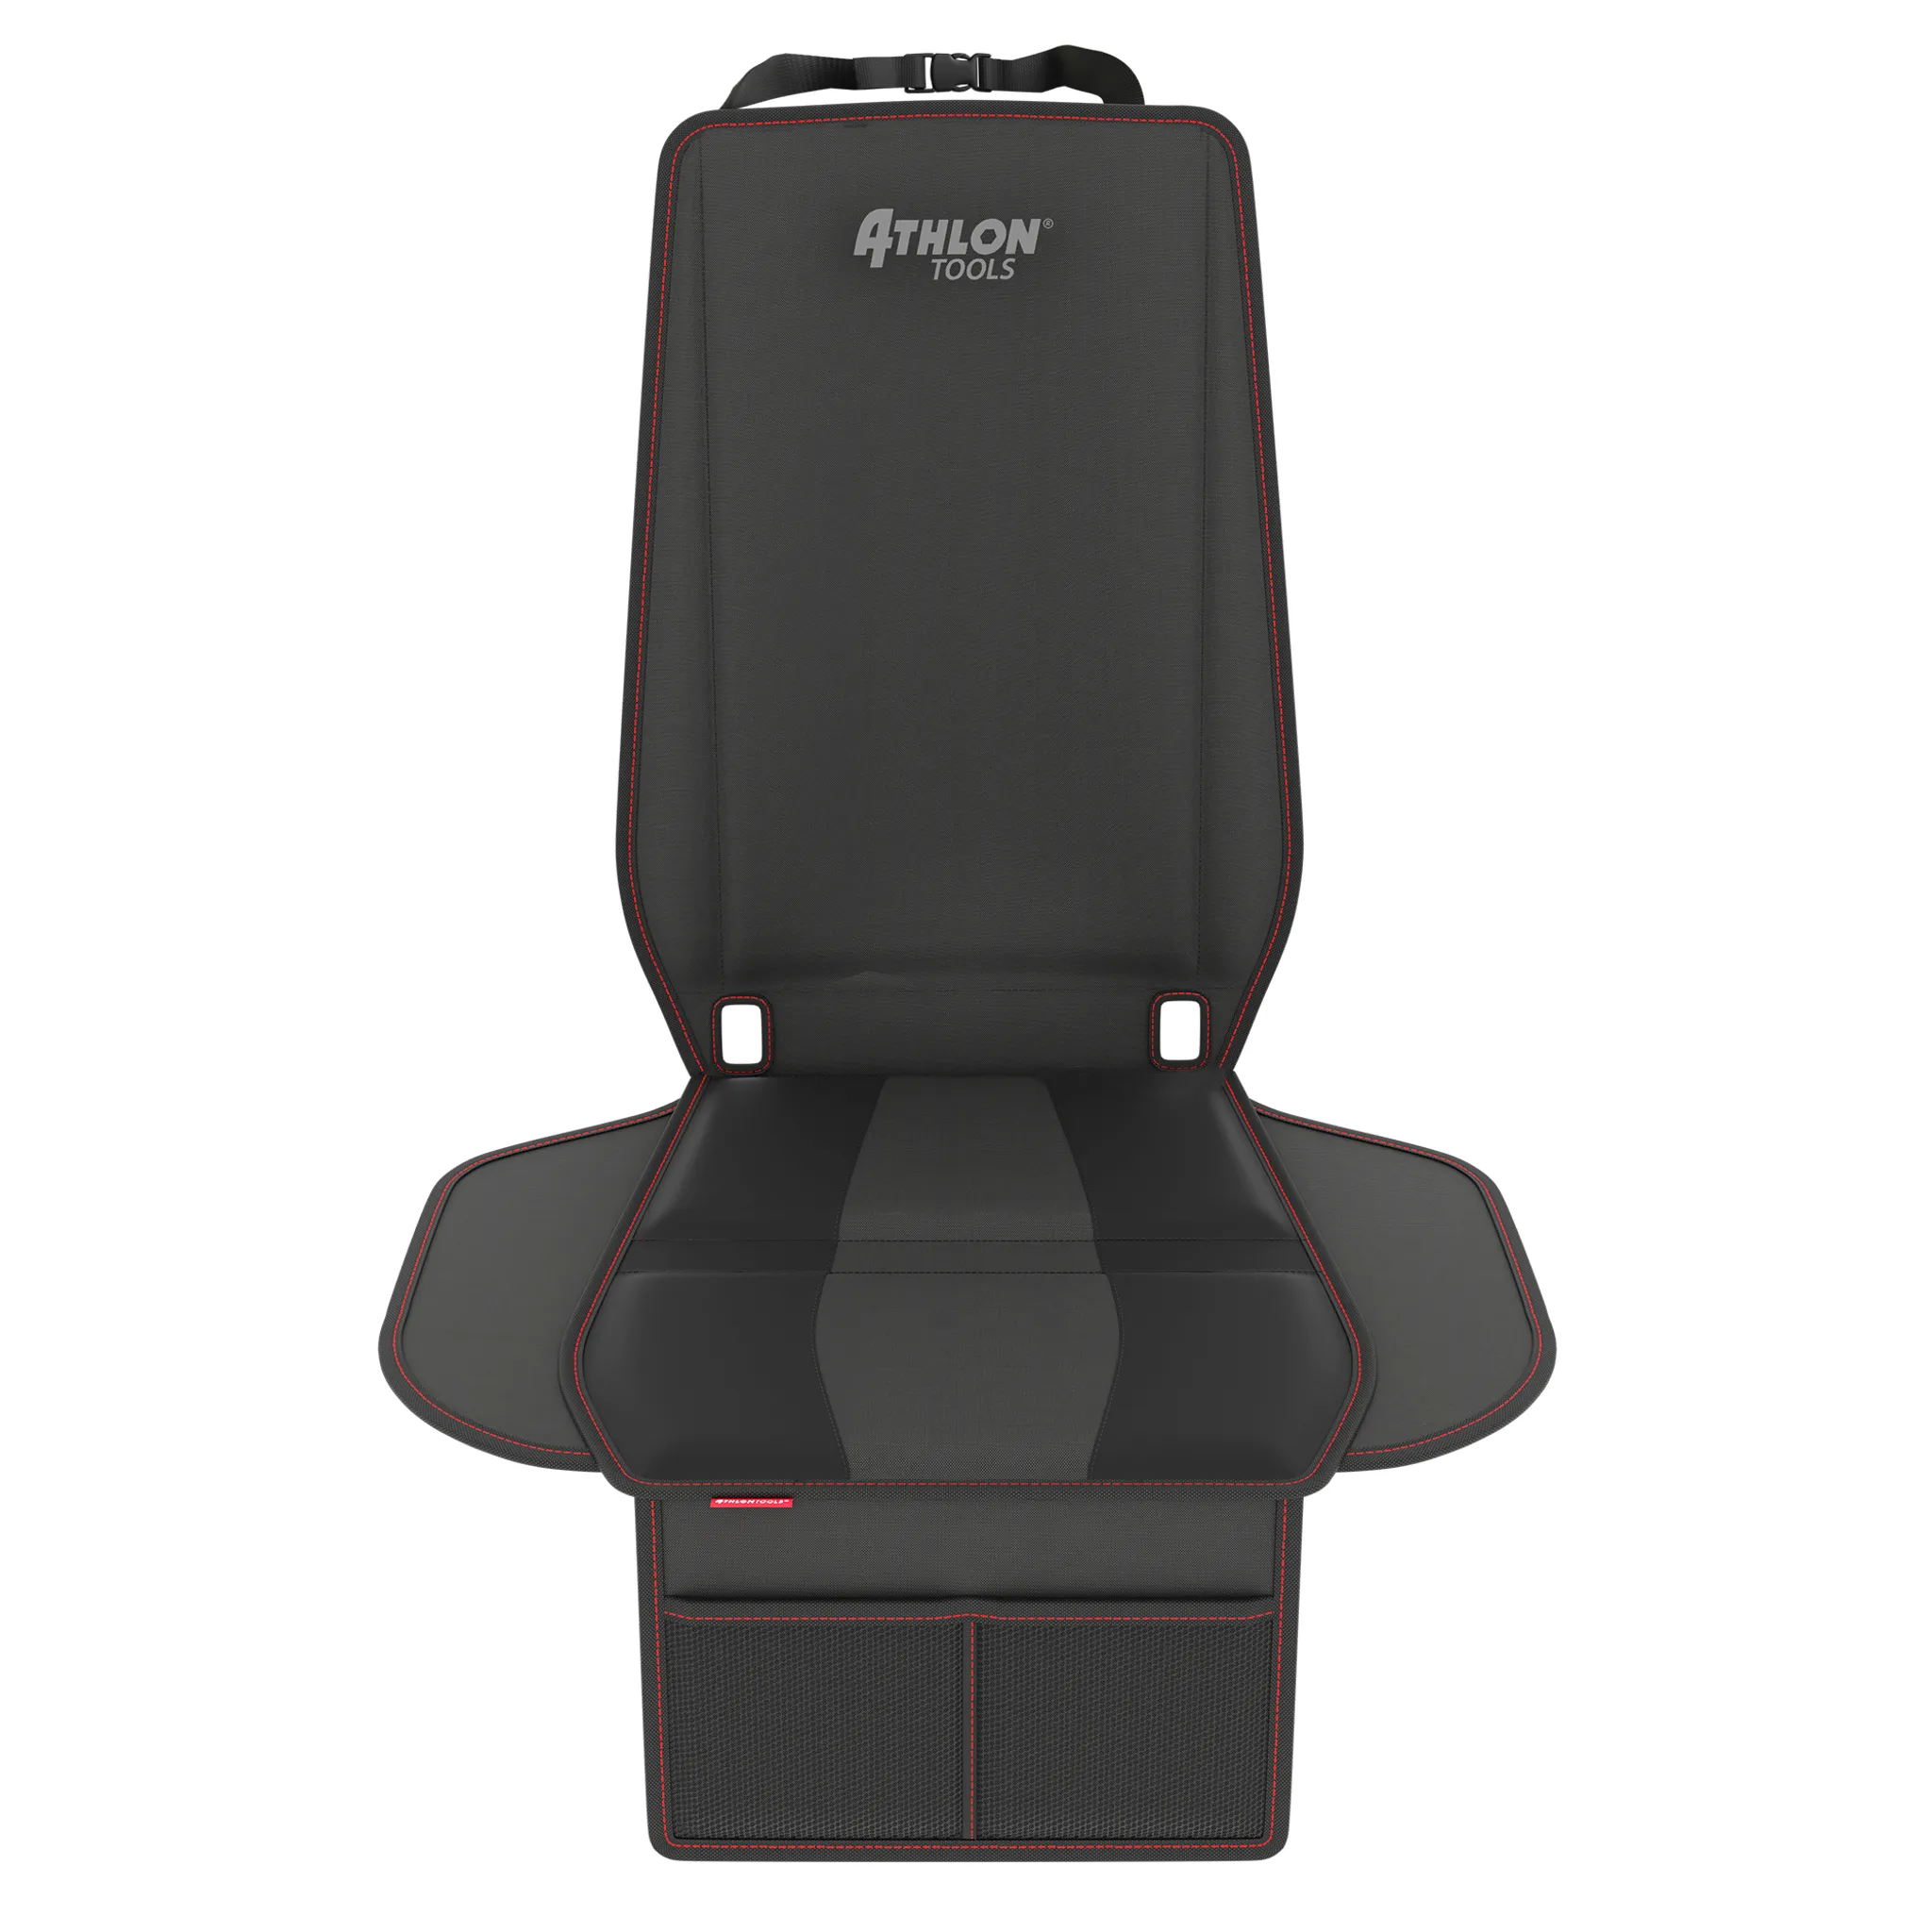 ATHLON TOOLS Kindersitz-Unterlage mit Seitenschutz - Optimale Passform -  Isofix kompatibel